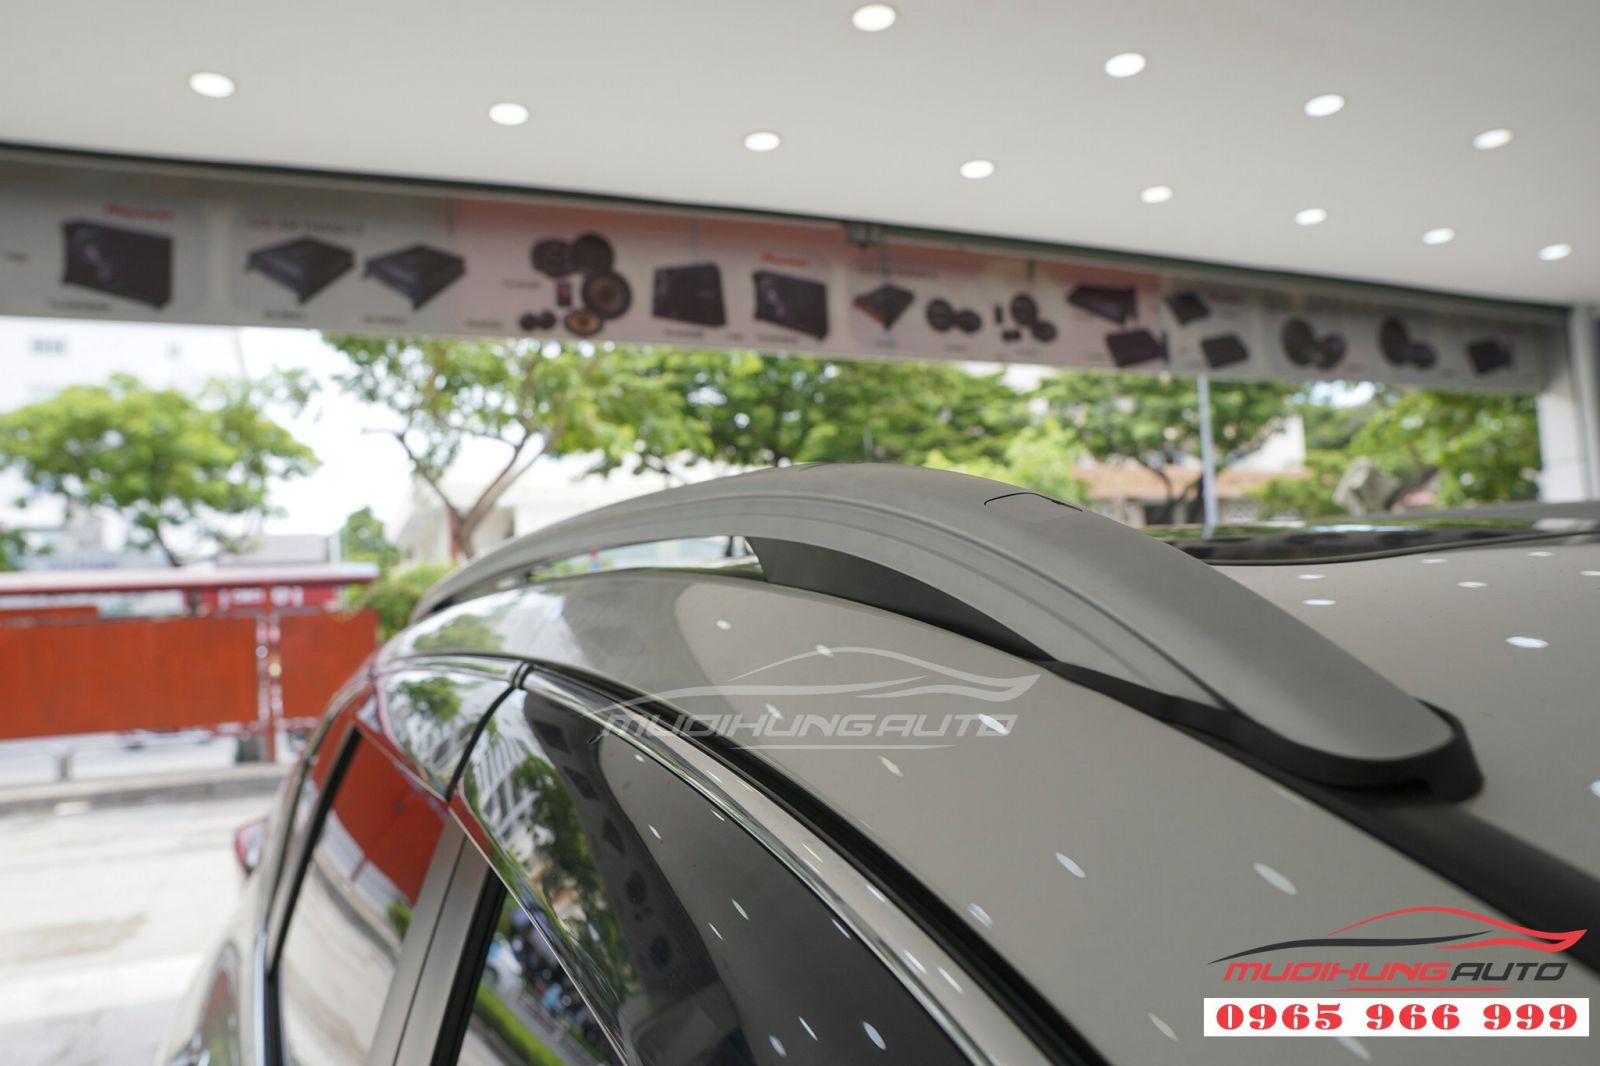 Lắp thanh giá nóc cao cho Honda CRV 2019 giá rẻ 01